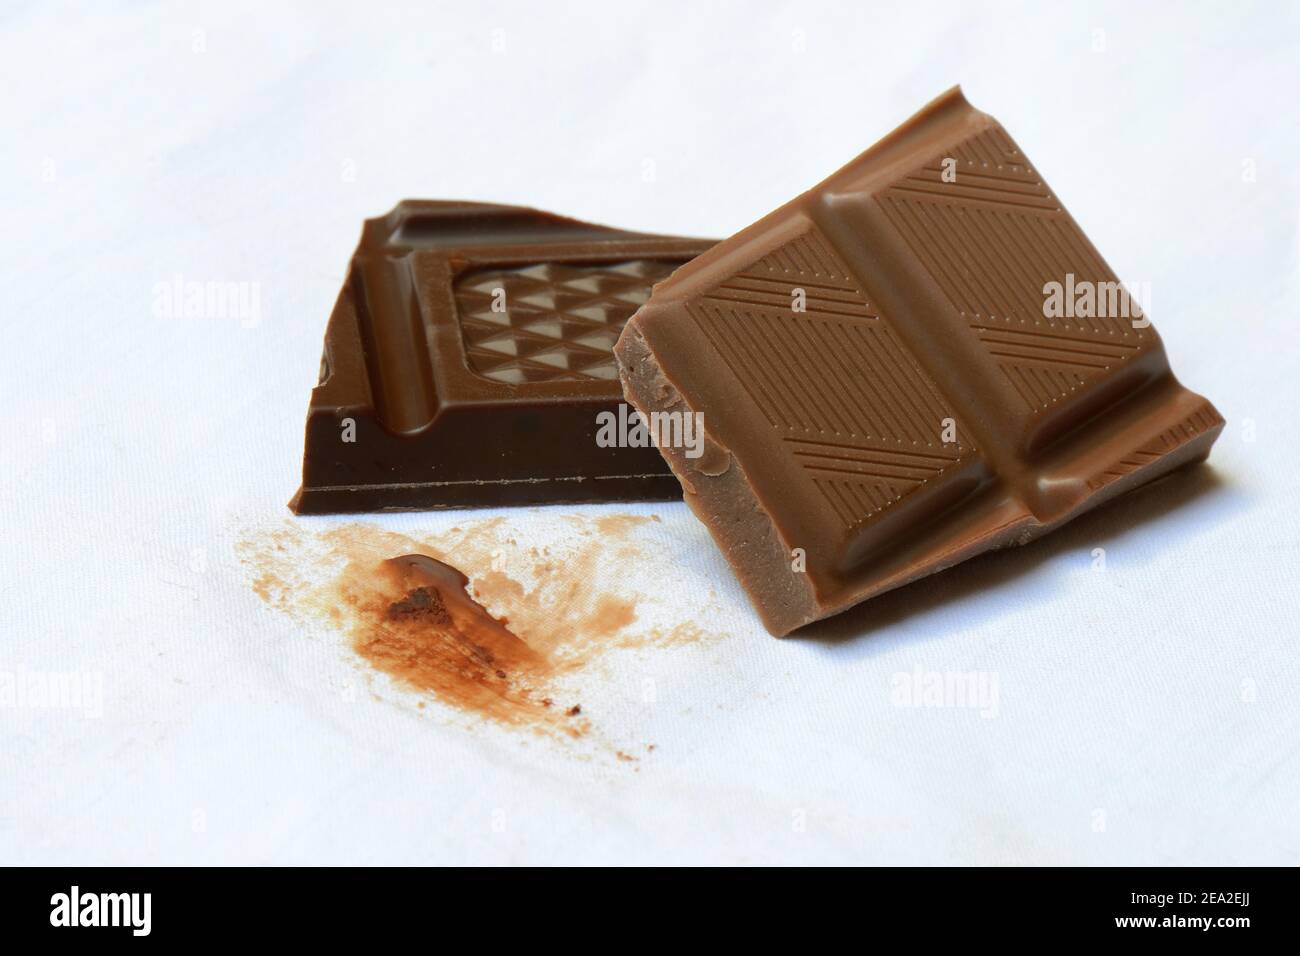 Chocolate stain on fabric, chocolate stain, chocolate pieces Stock Photo